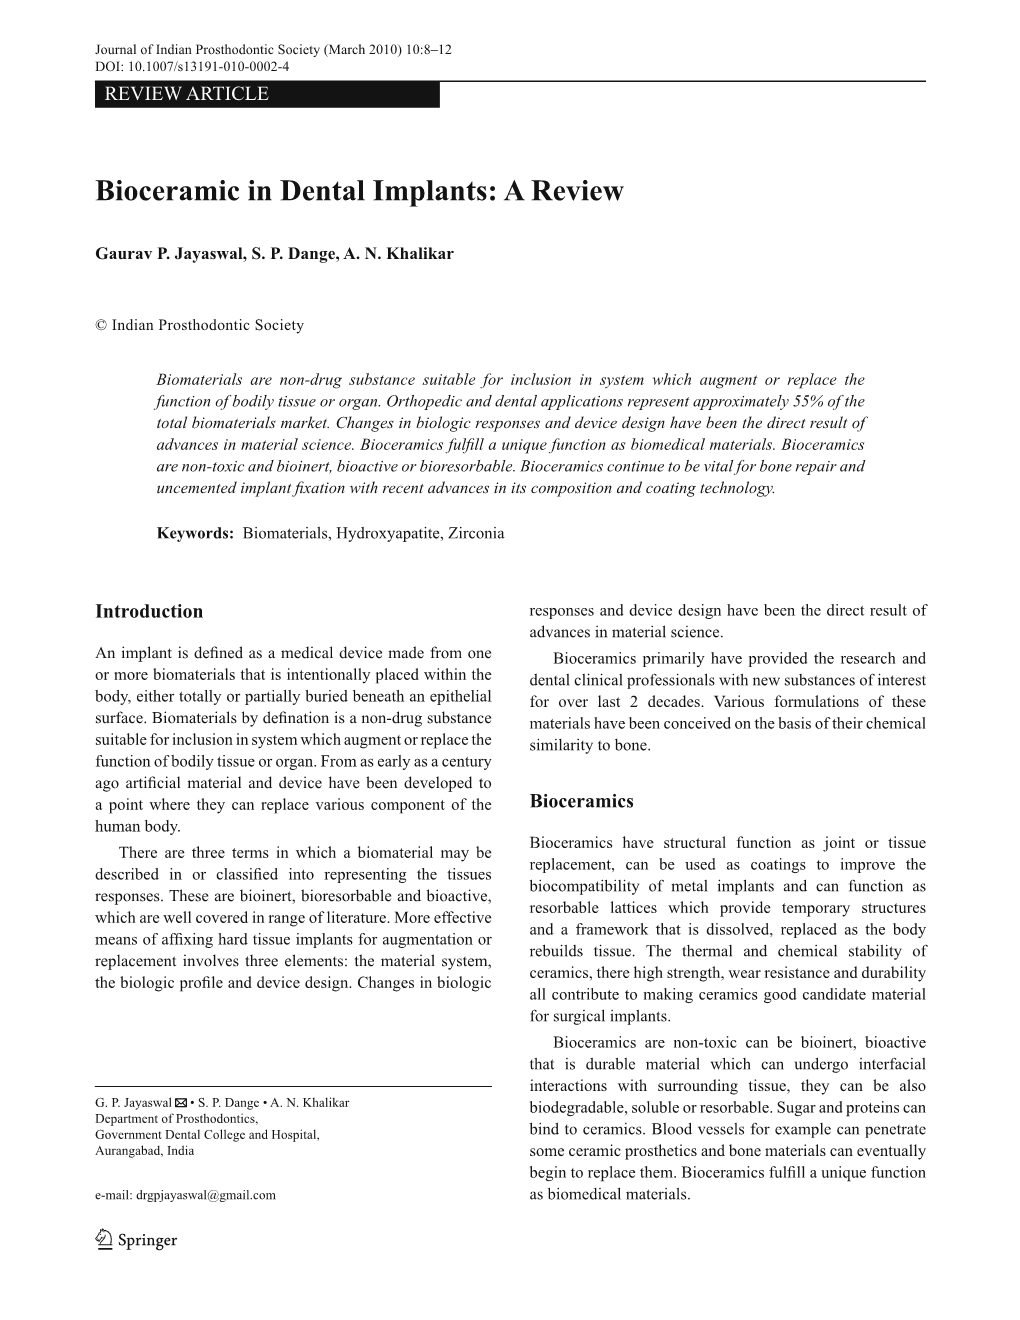 Bioceramic in Dental Implants: a Review